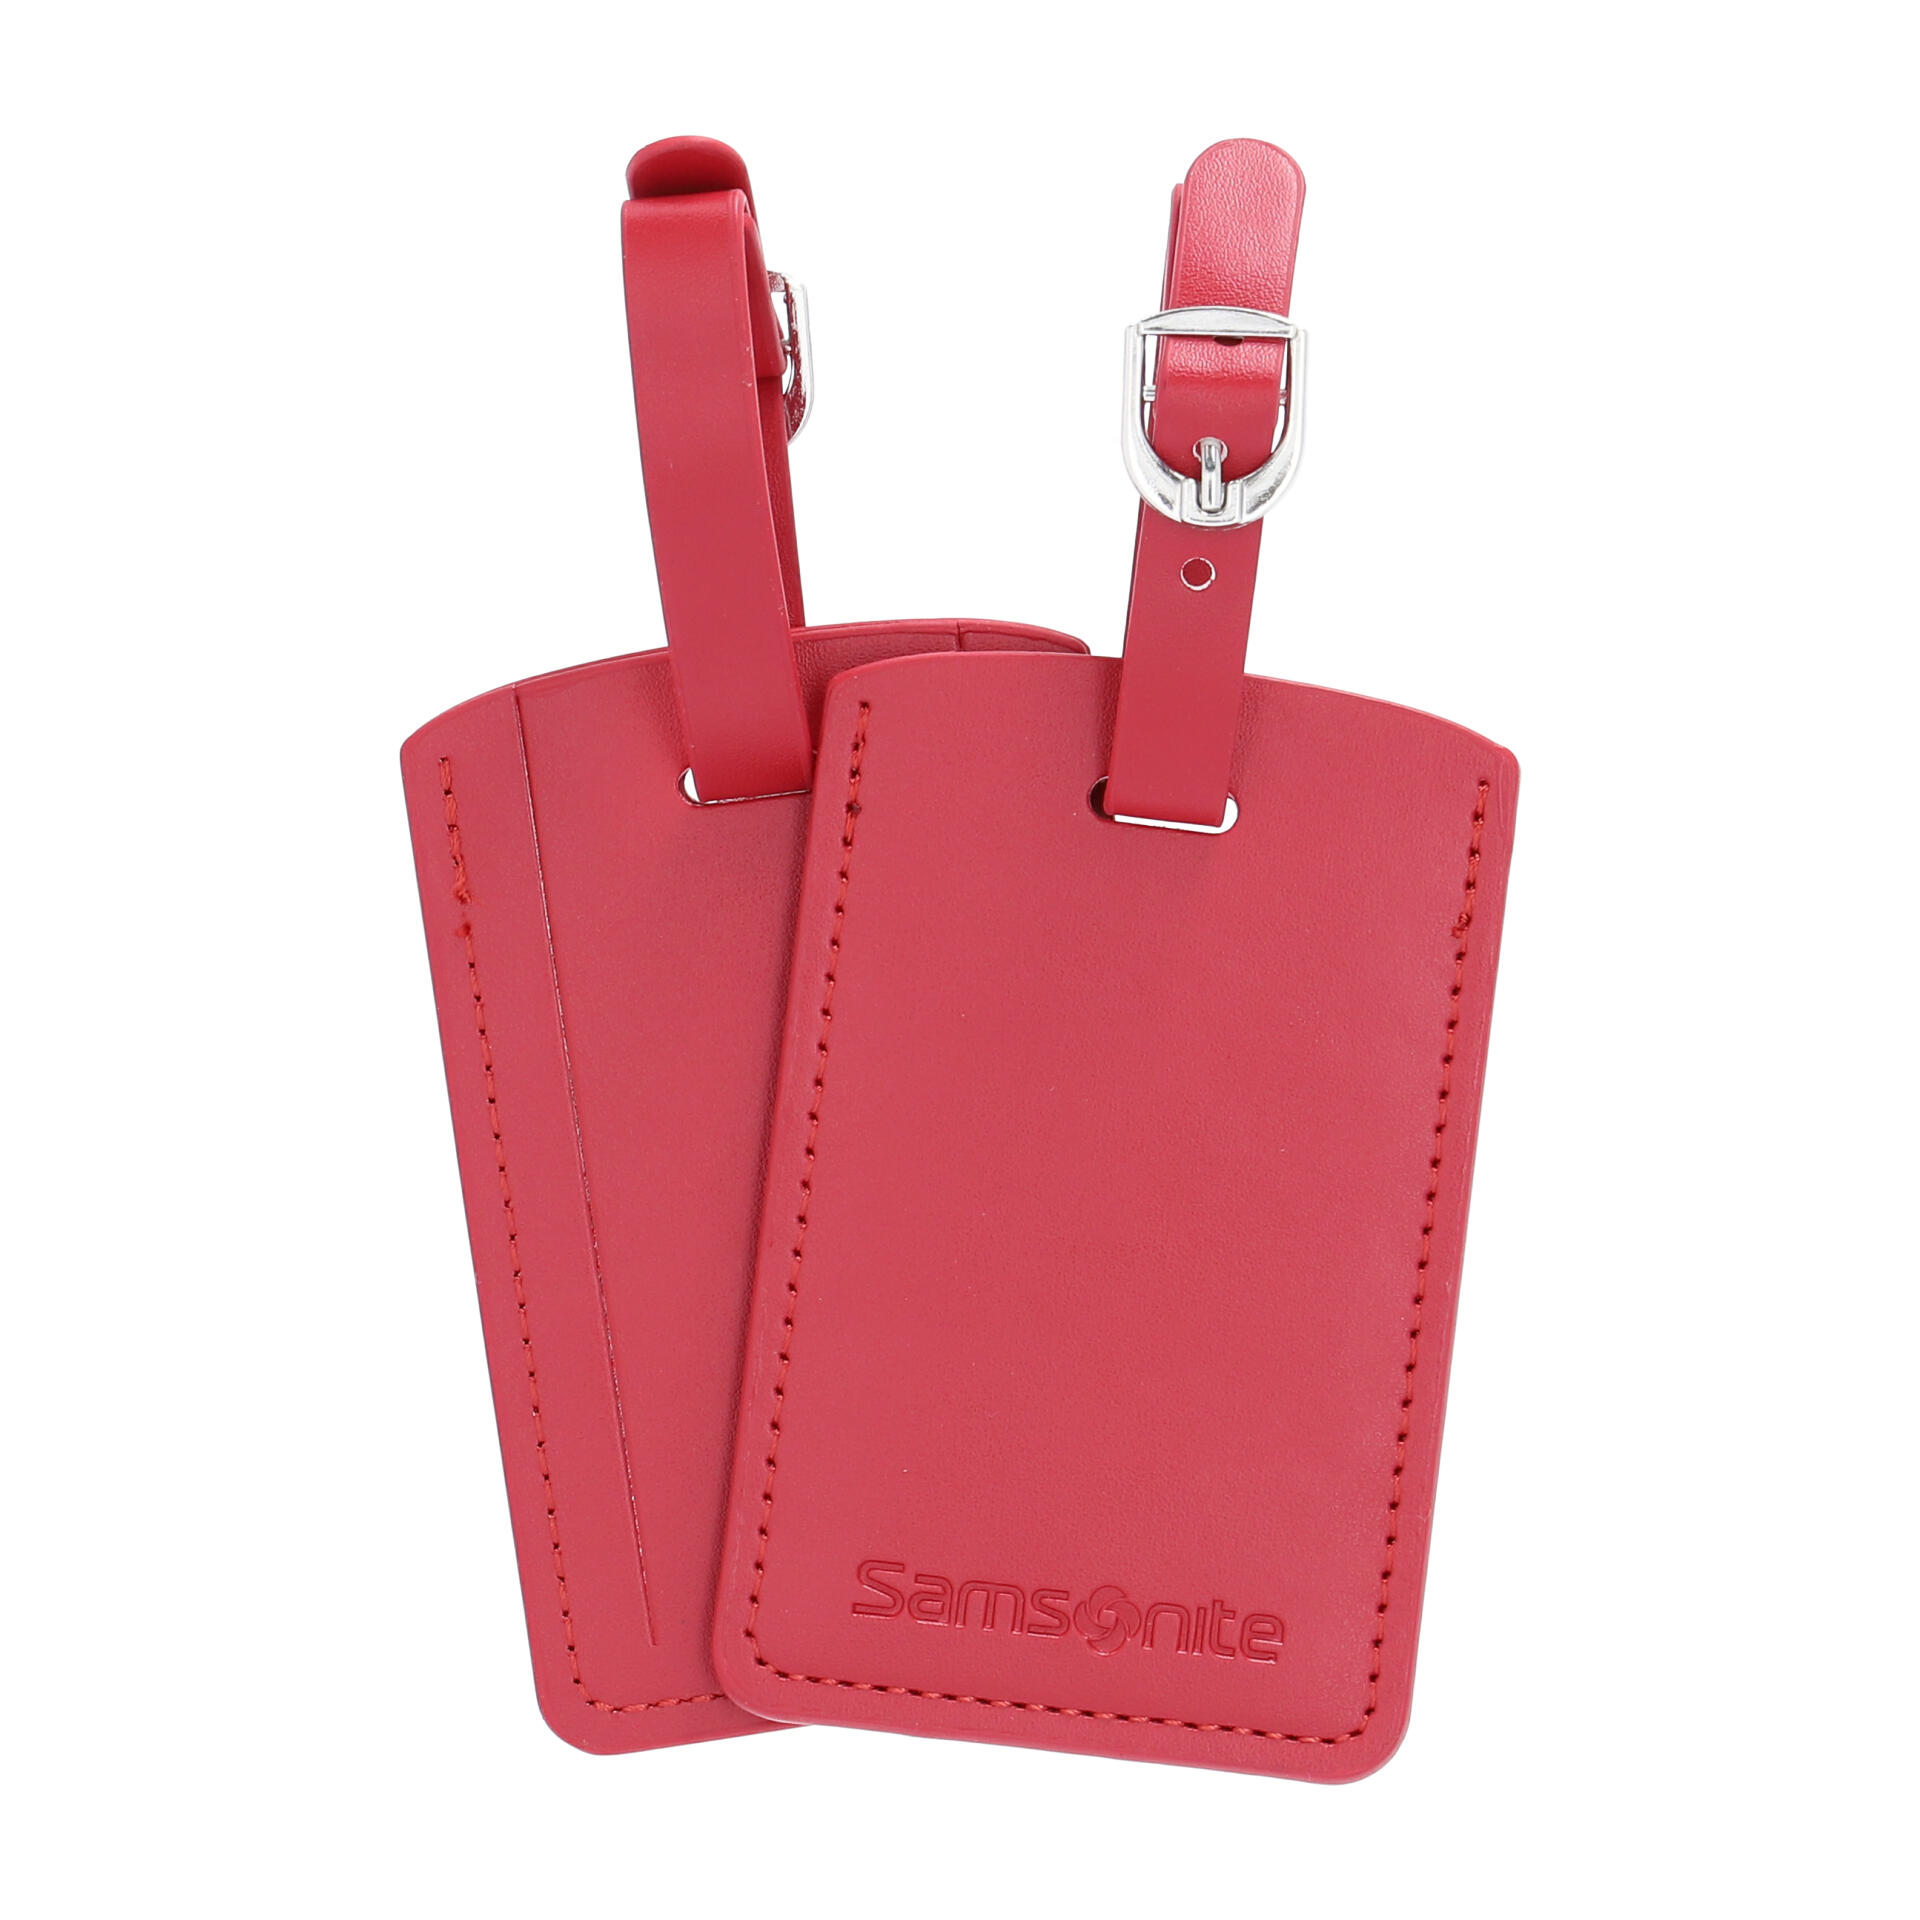 Samsonite Global Travel Accessories Gepäckanhänger red